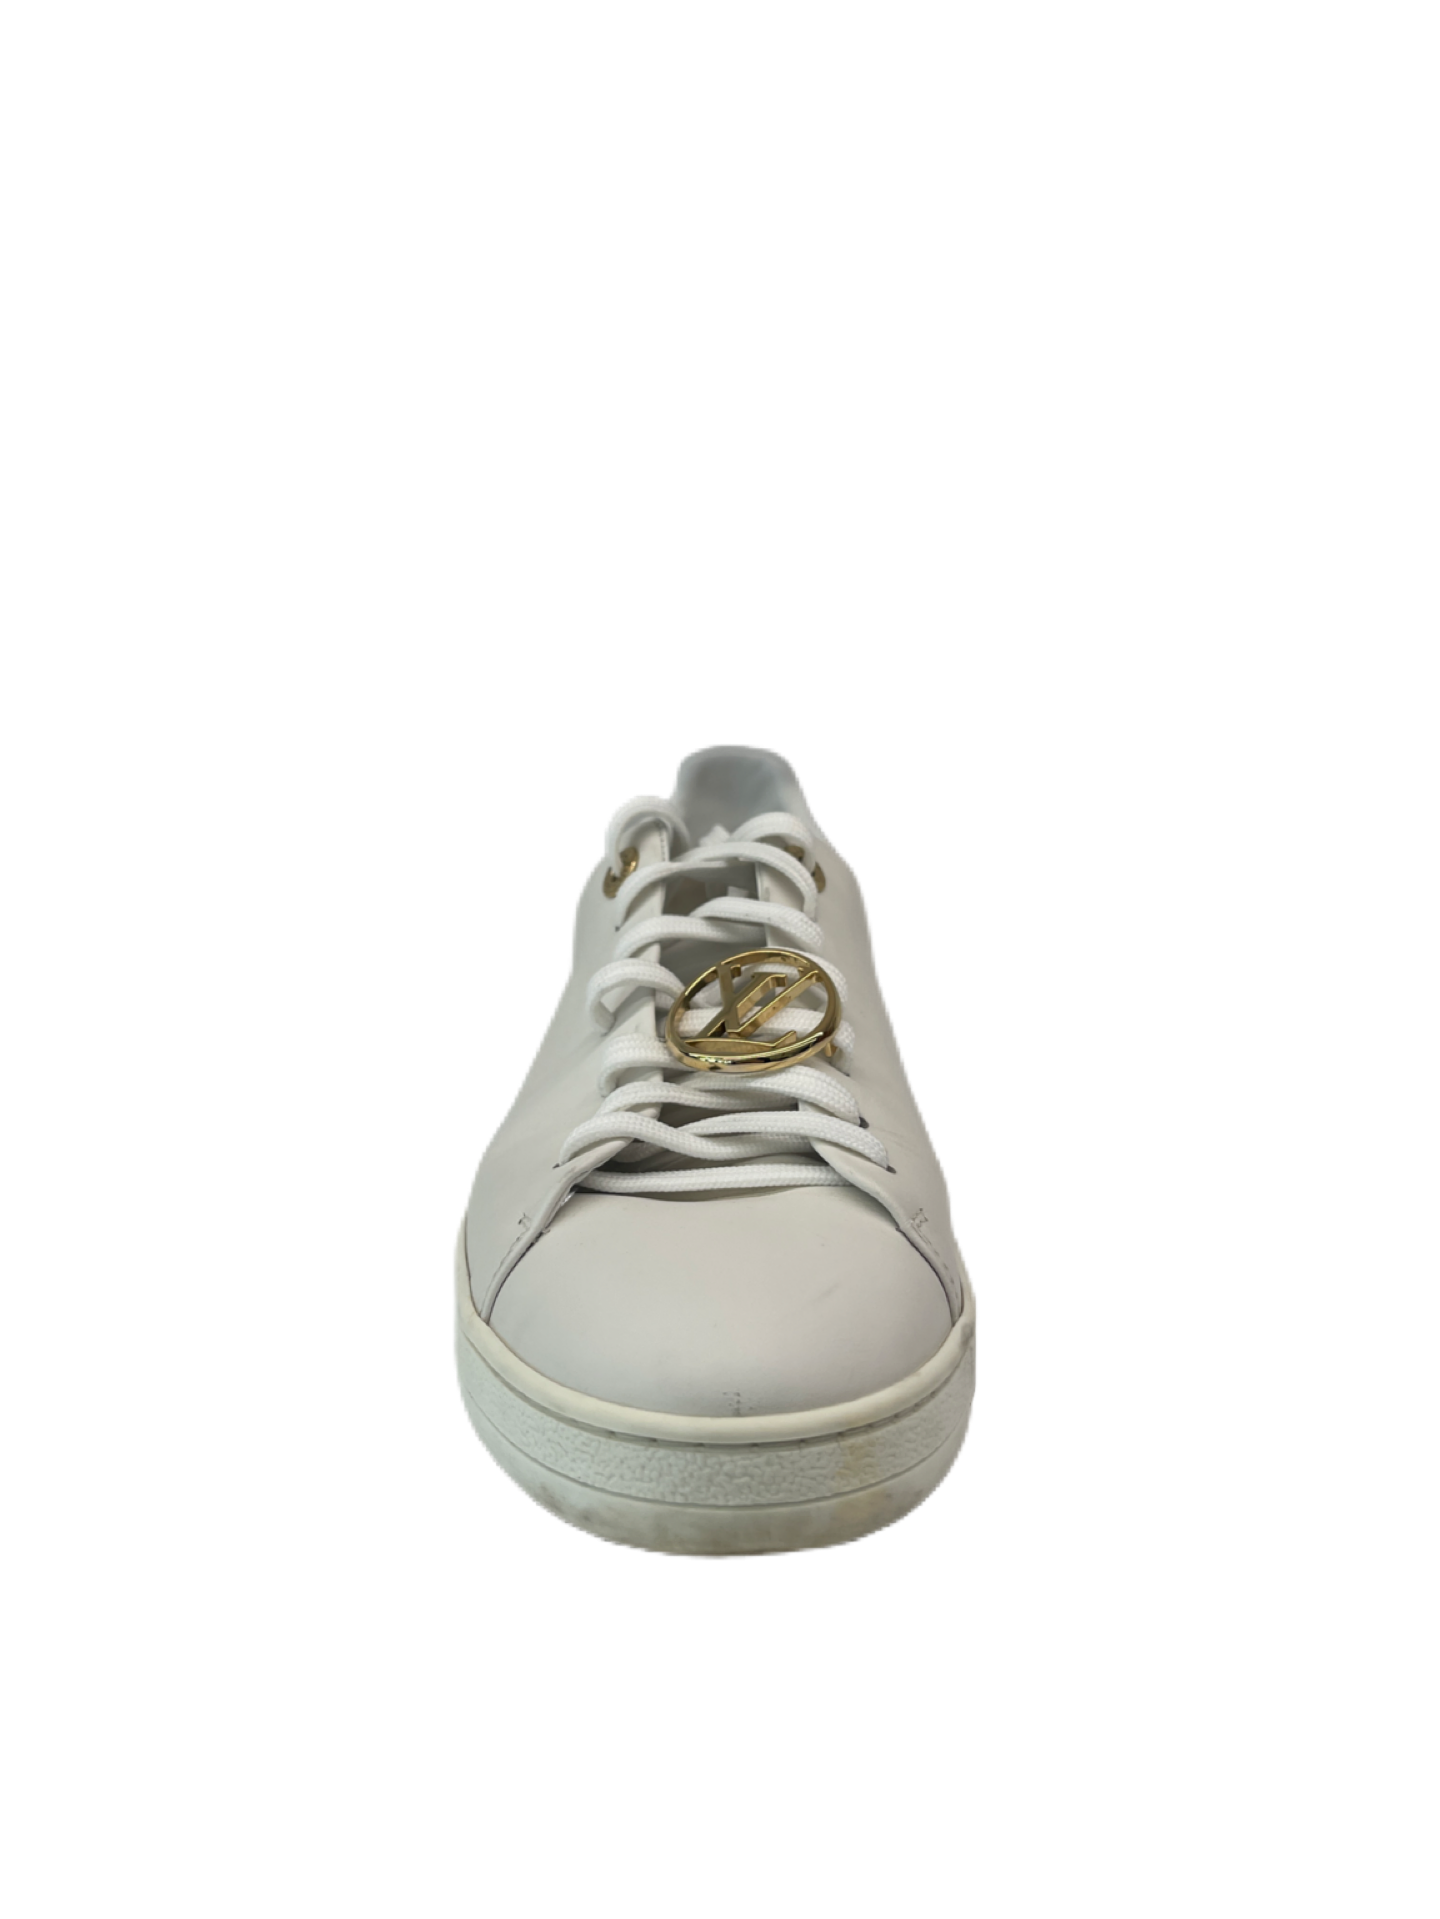 Louis Vuitton White Gold Emblem Lace Up Sneakers. Size: 39